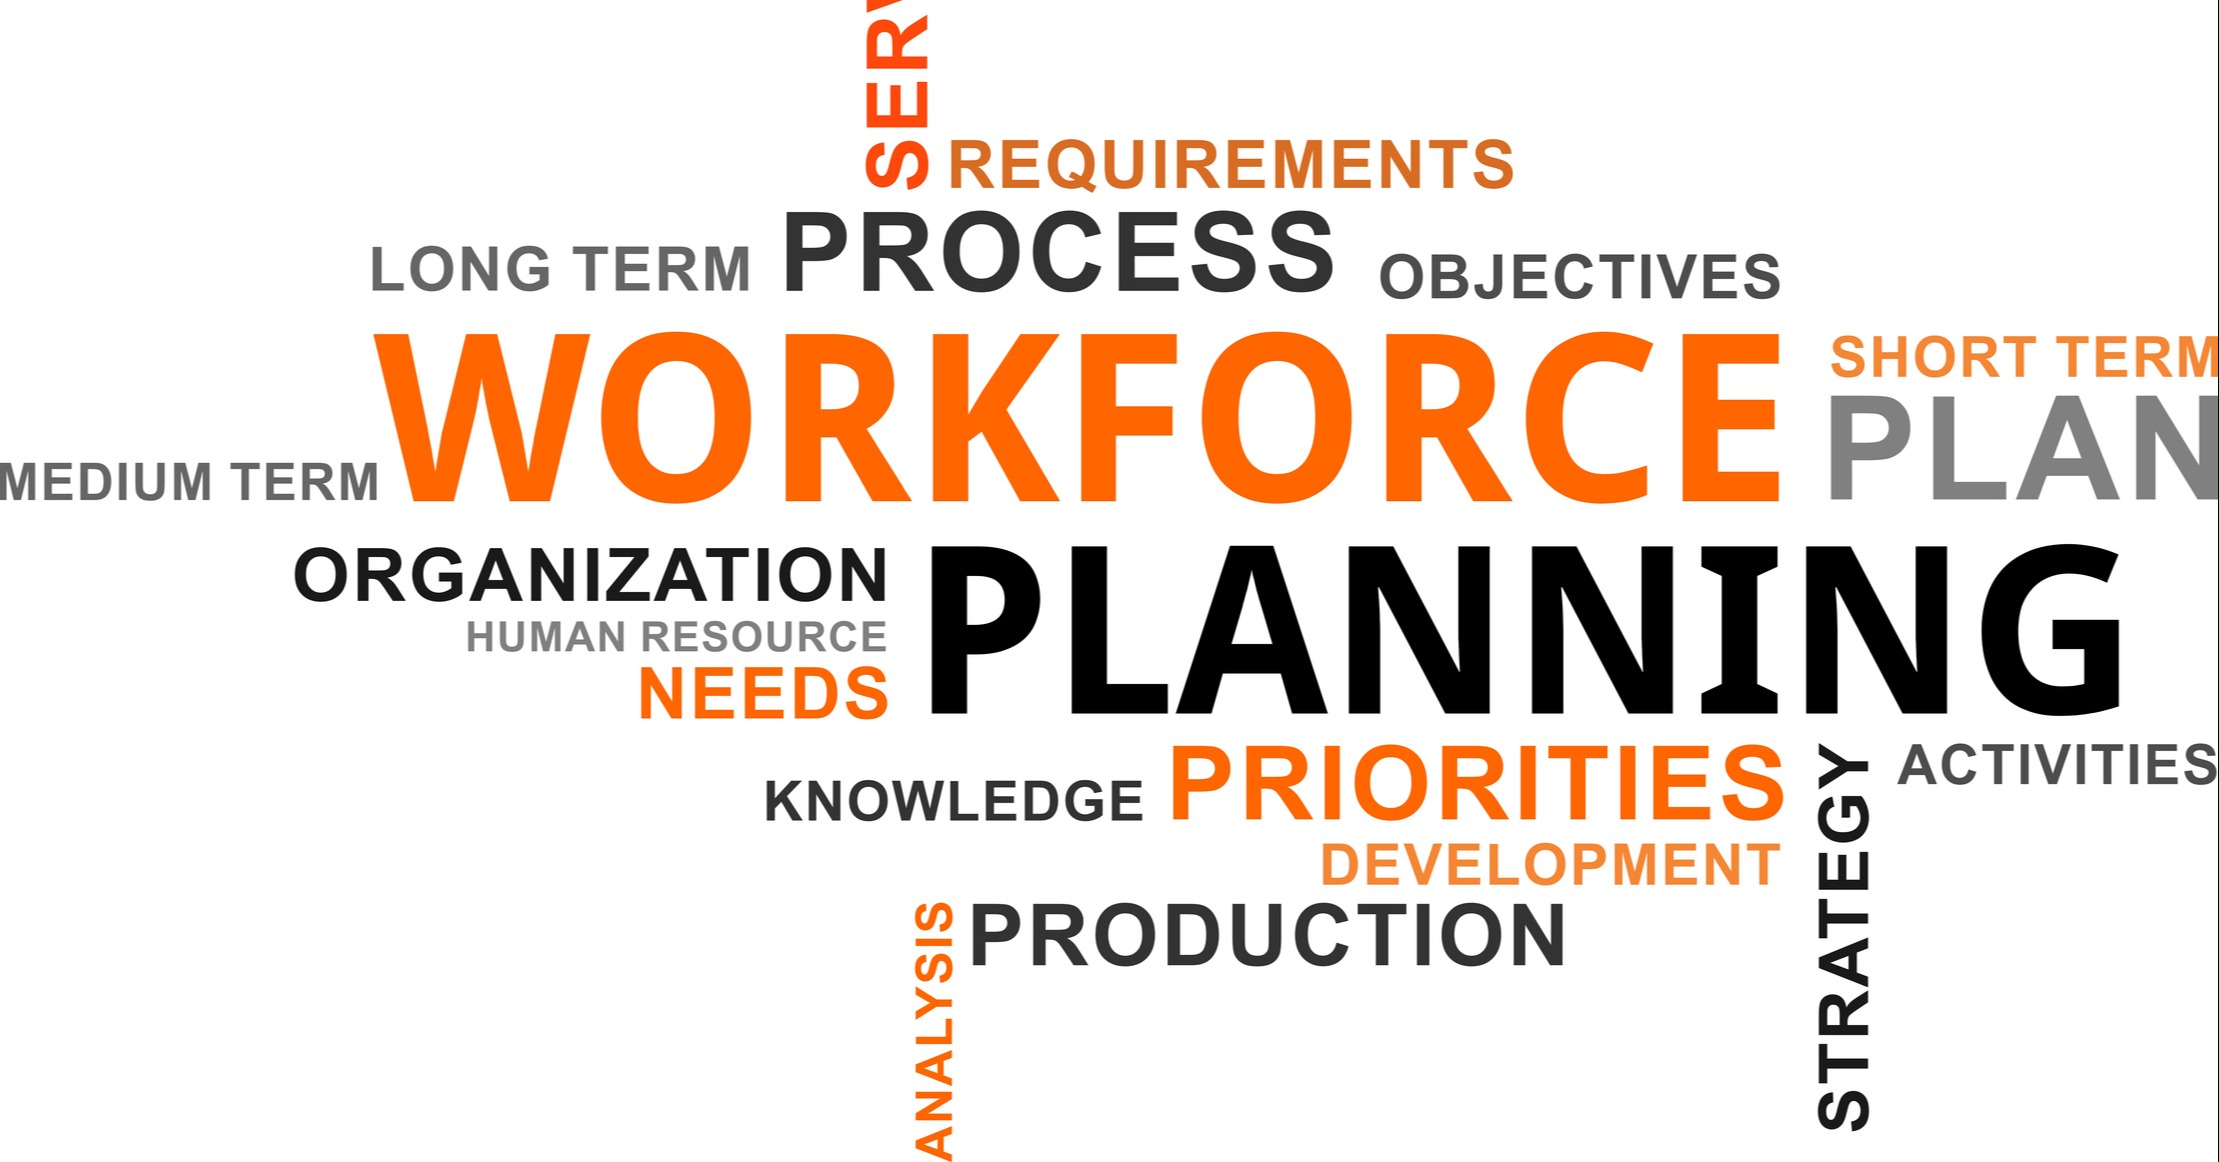 Workforce management software (WFM)